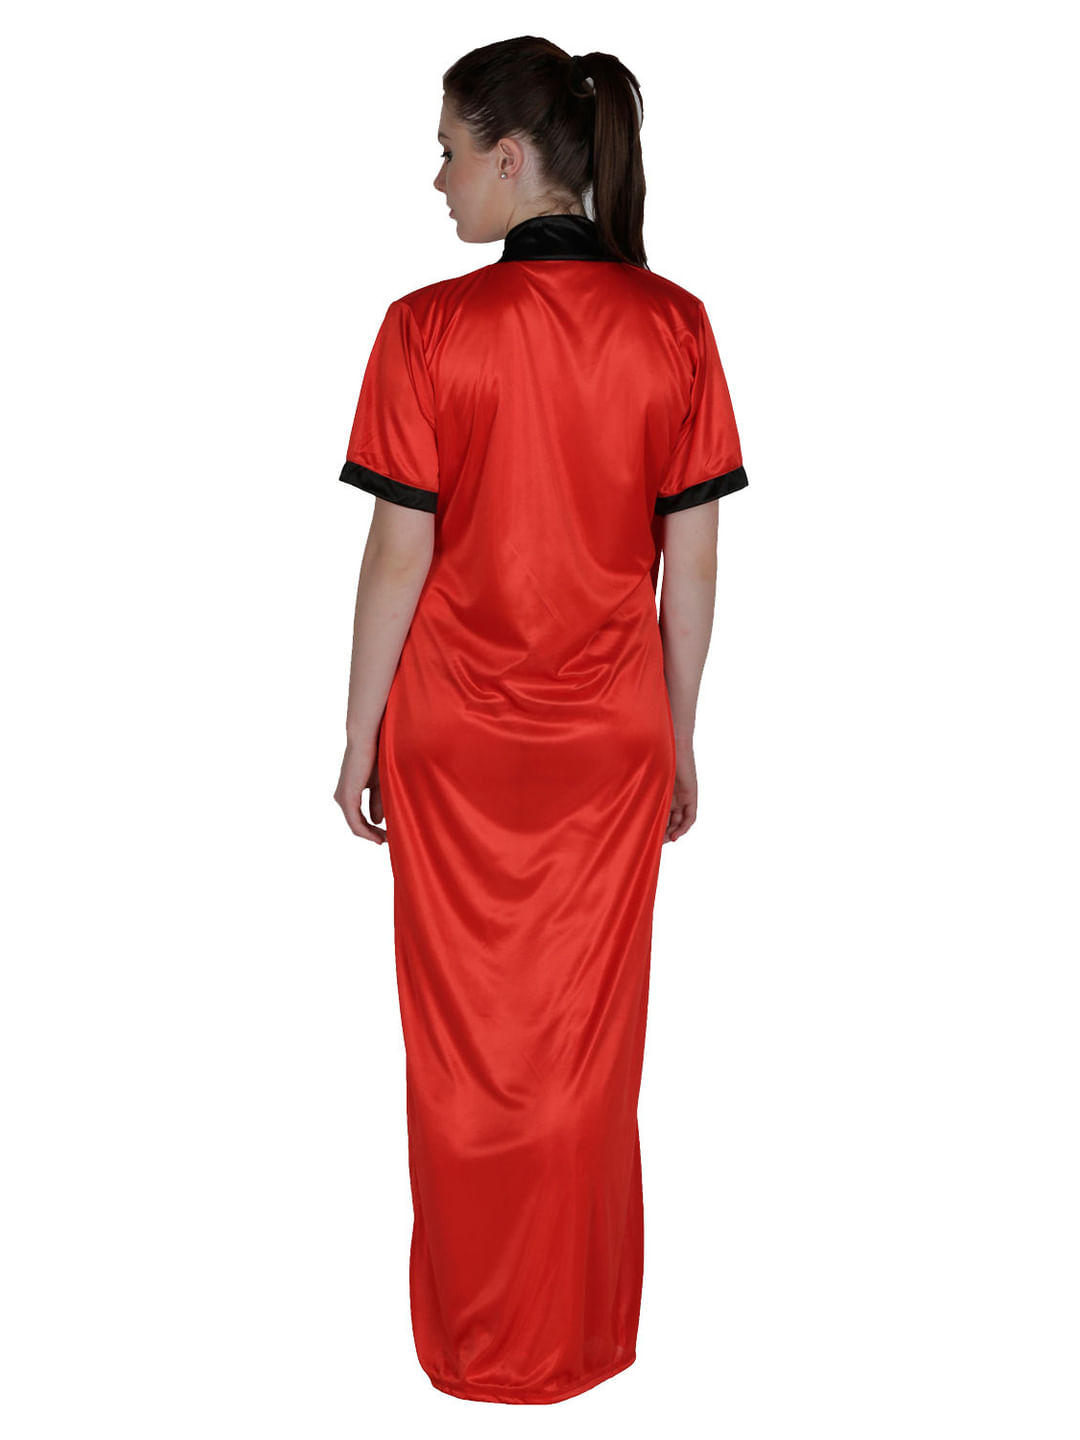 Satin Black, Red Robe, Housecoat (Free Size, HC-51)